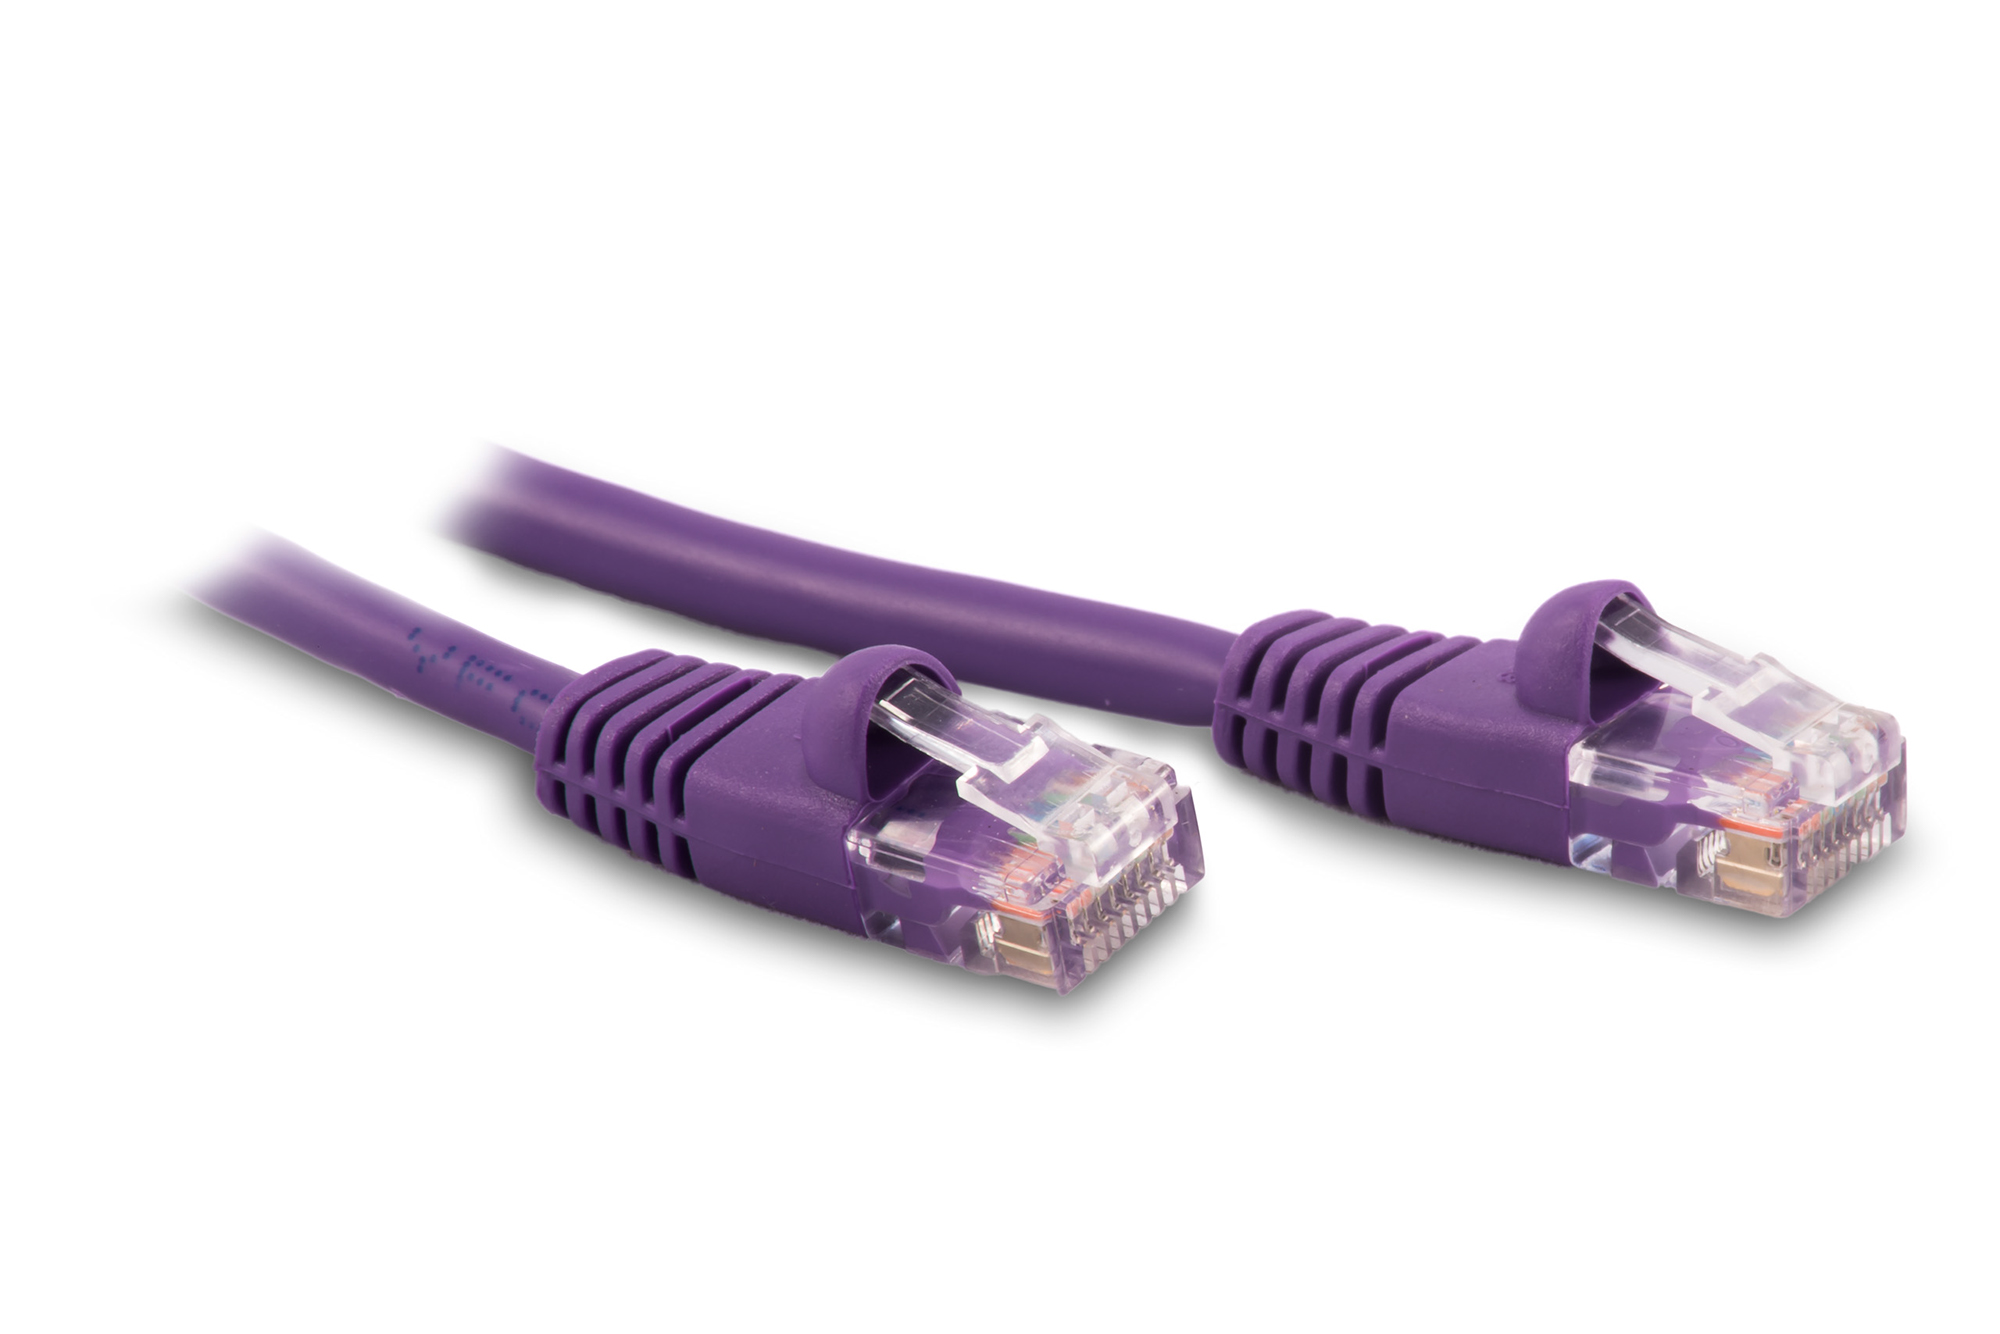 50ft Cat5e Ethernet Patch Cable - Violet Color - Snagless Boot, Stranded, RJ45, 350Mhz, 24AWG